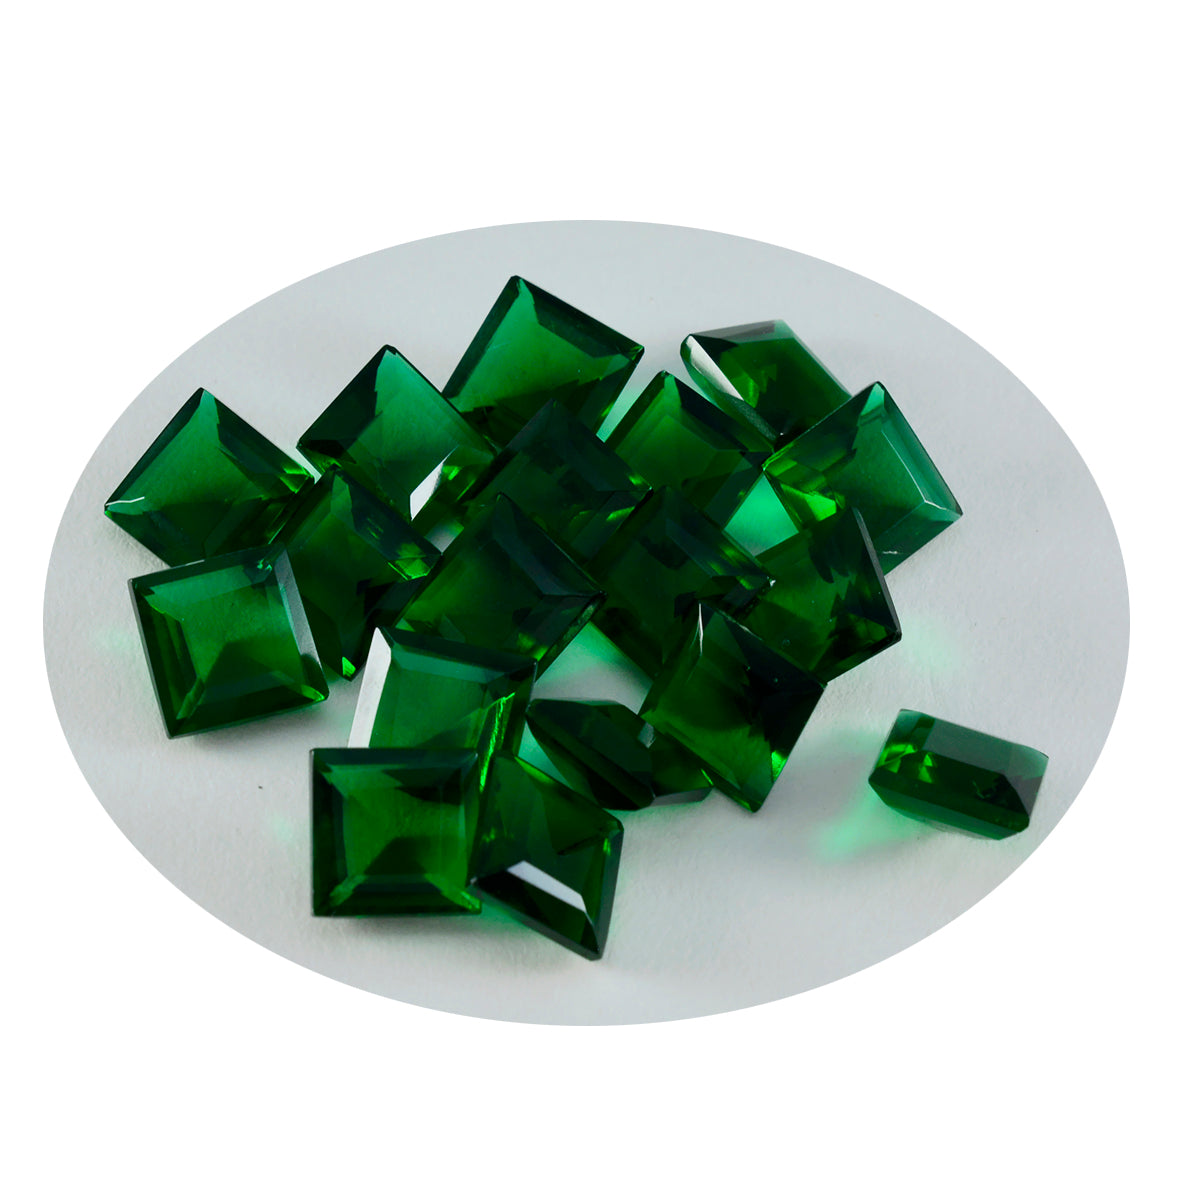 Riyogems 1PC Green Emerald CZ Faceted 8x8 mm Square Shape pretty Quality Gems